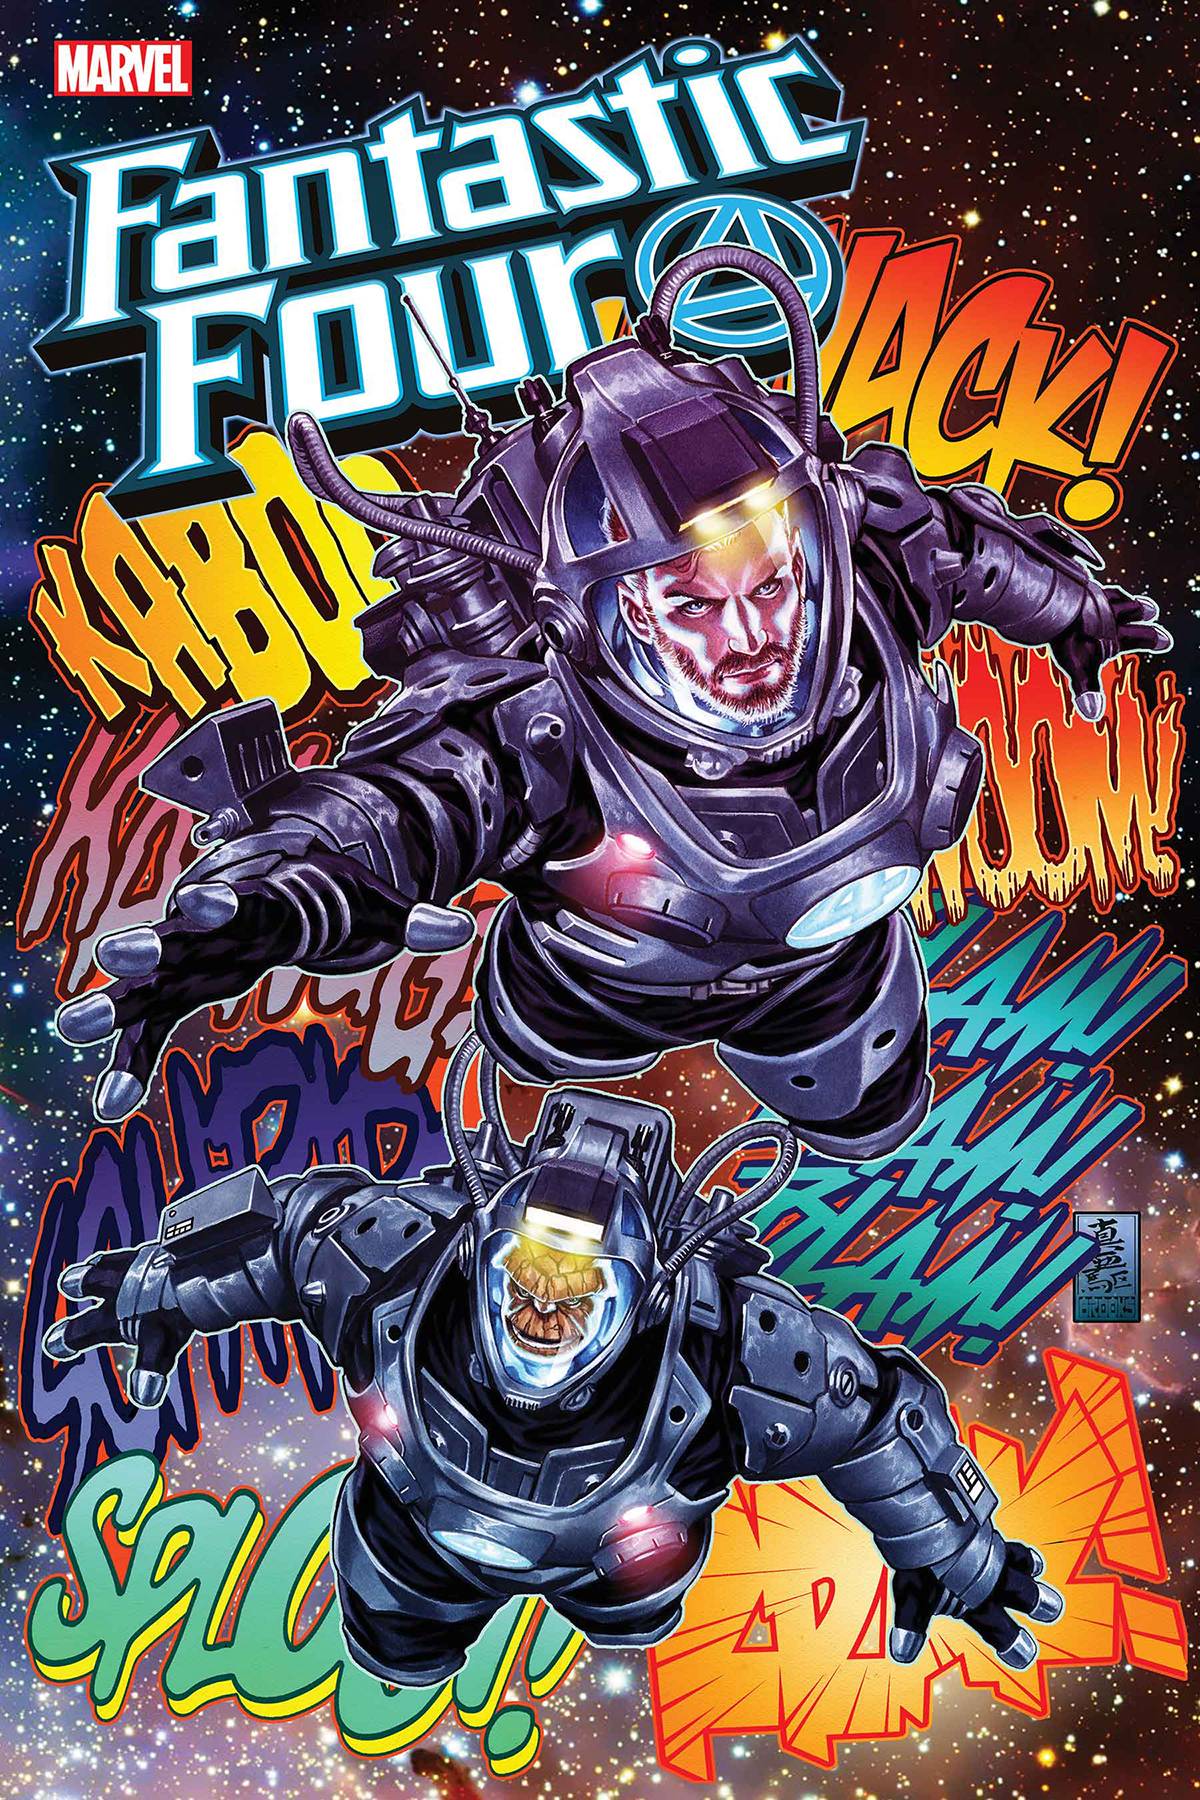 Fantastic Four #31 (04/28/2021) - State of Comics